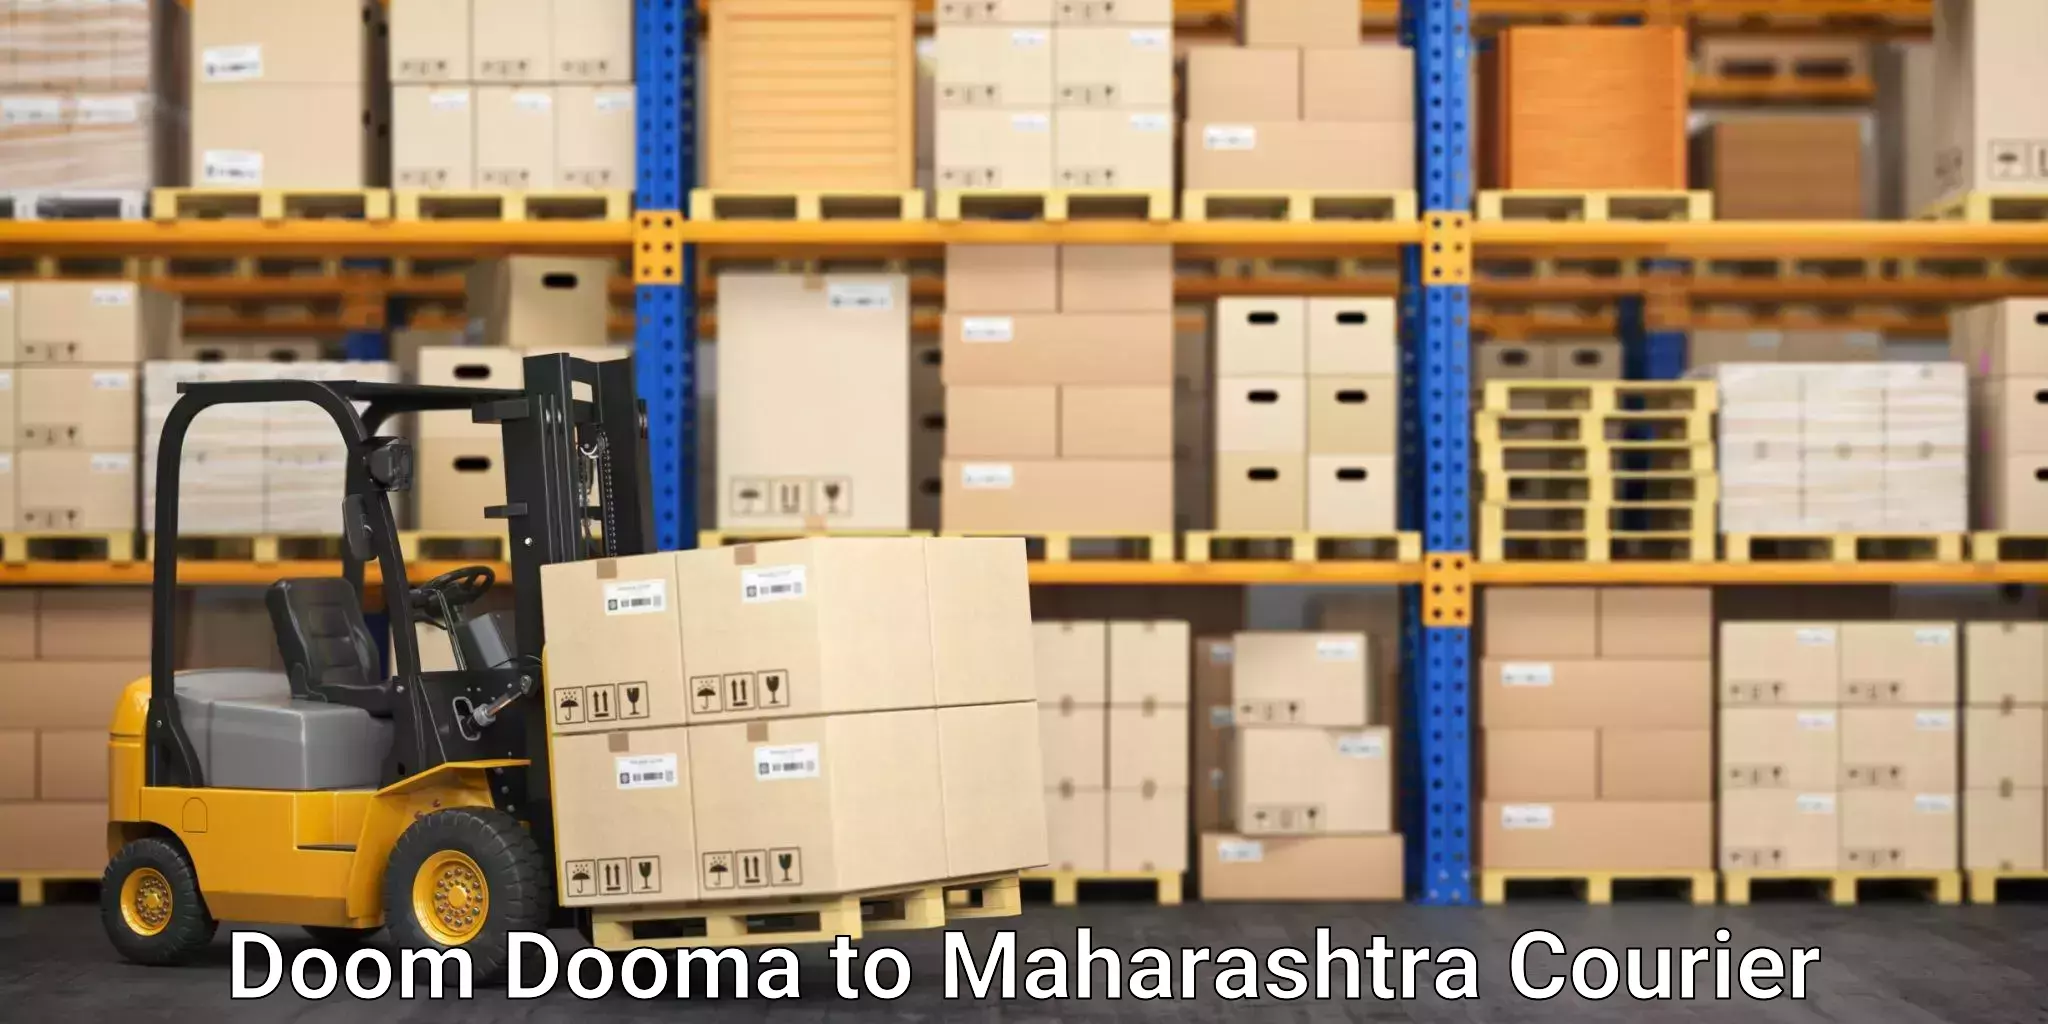 Automated shipping processes Doom Dooma to Ojhar